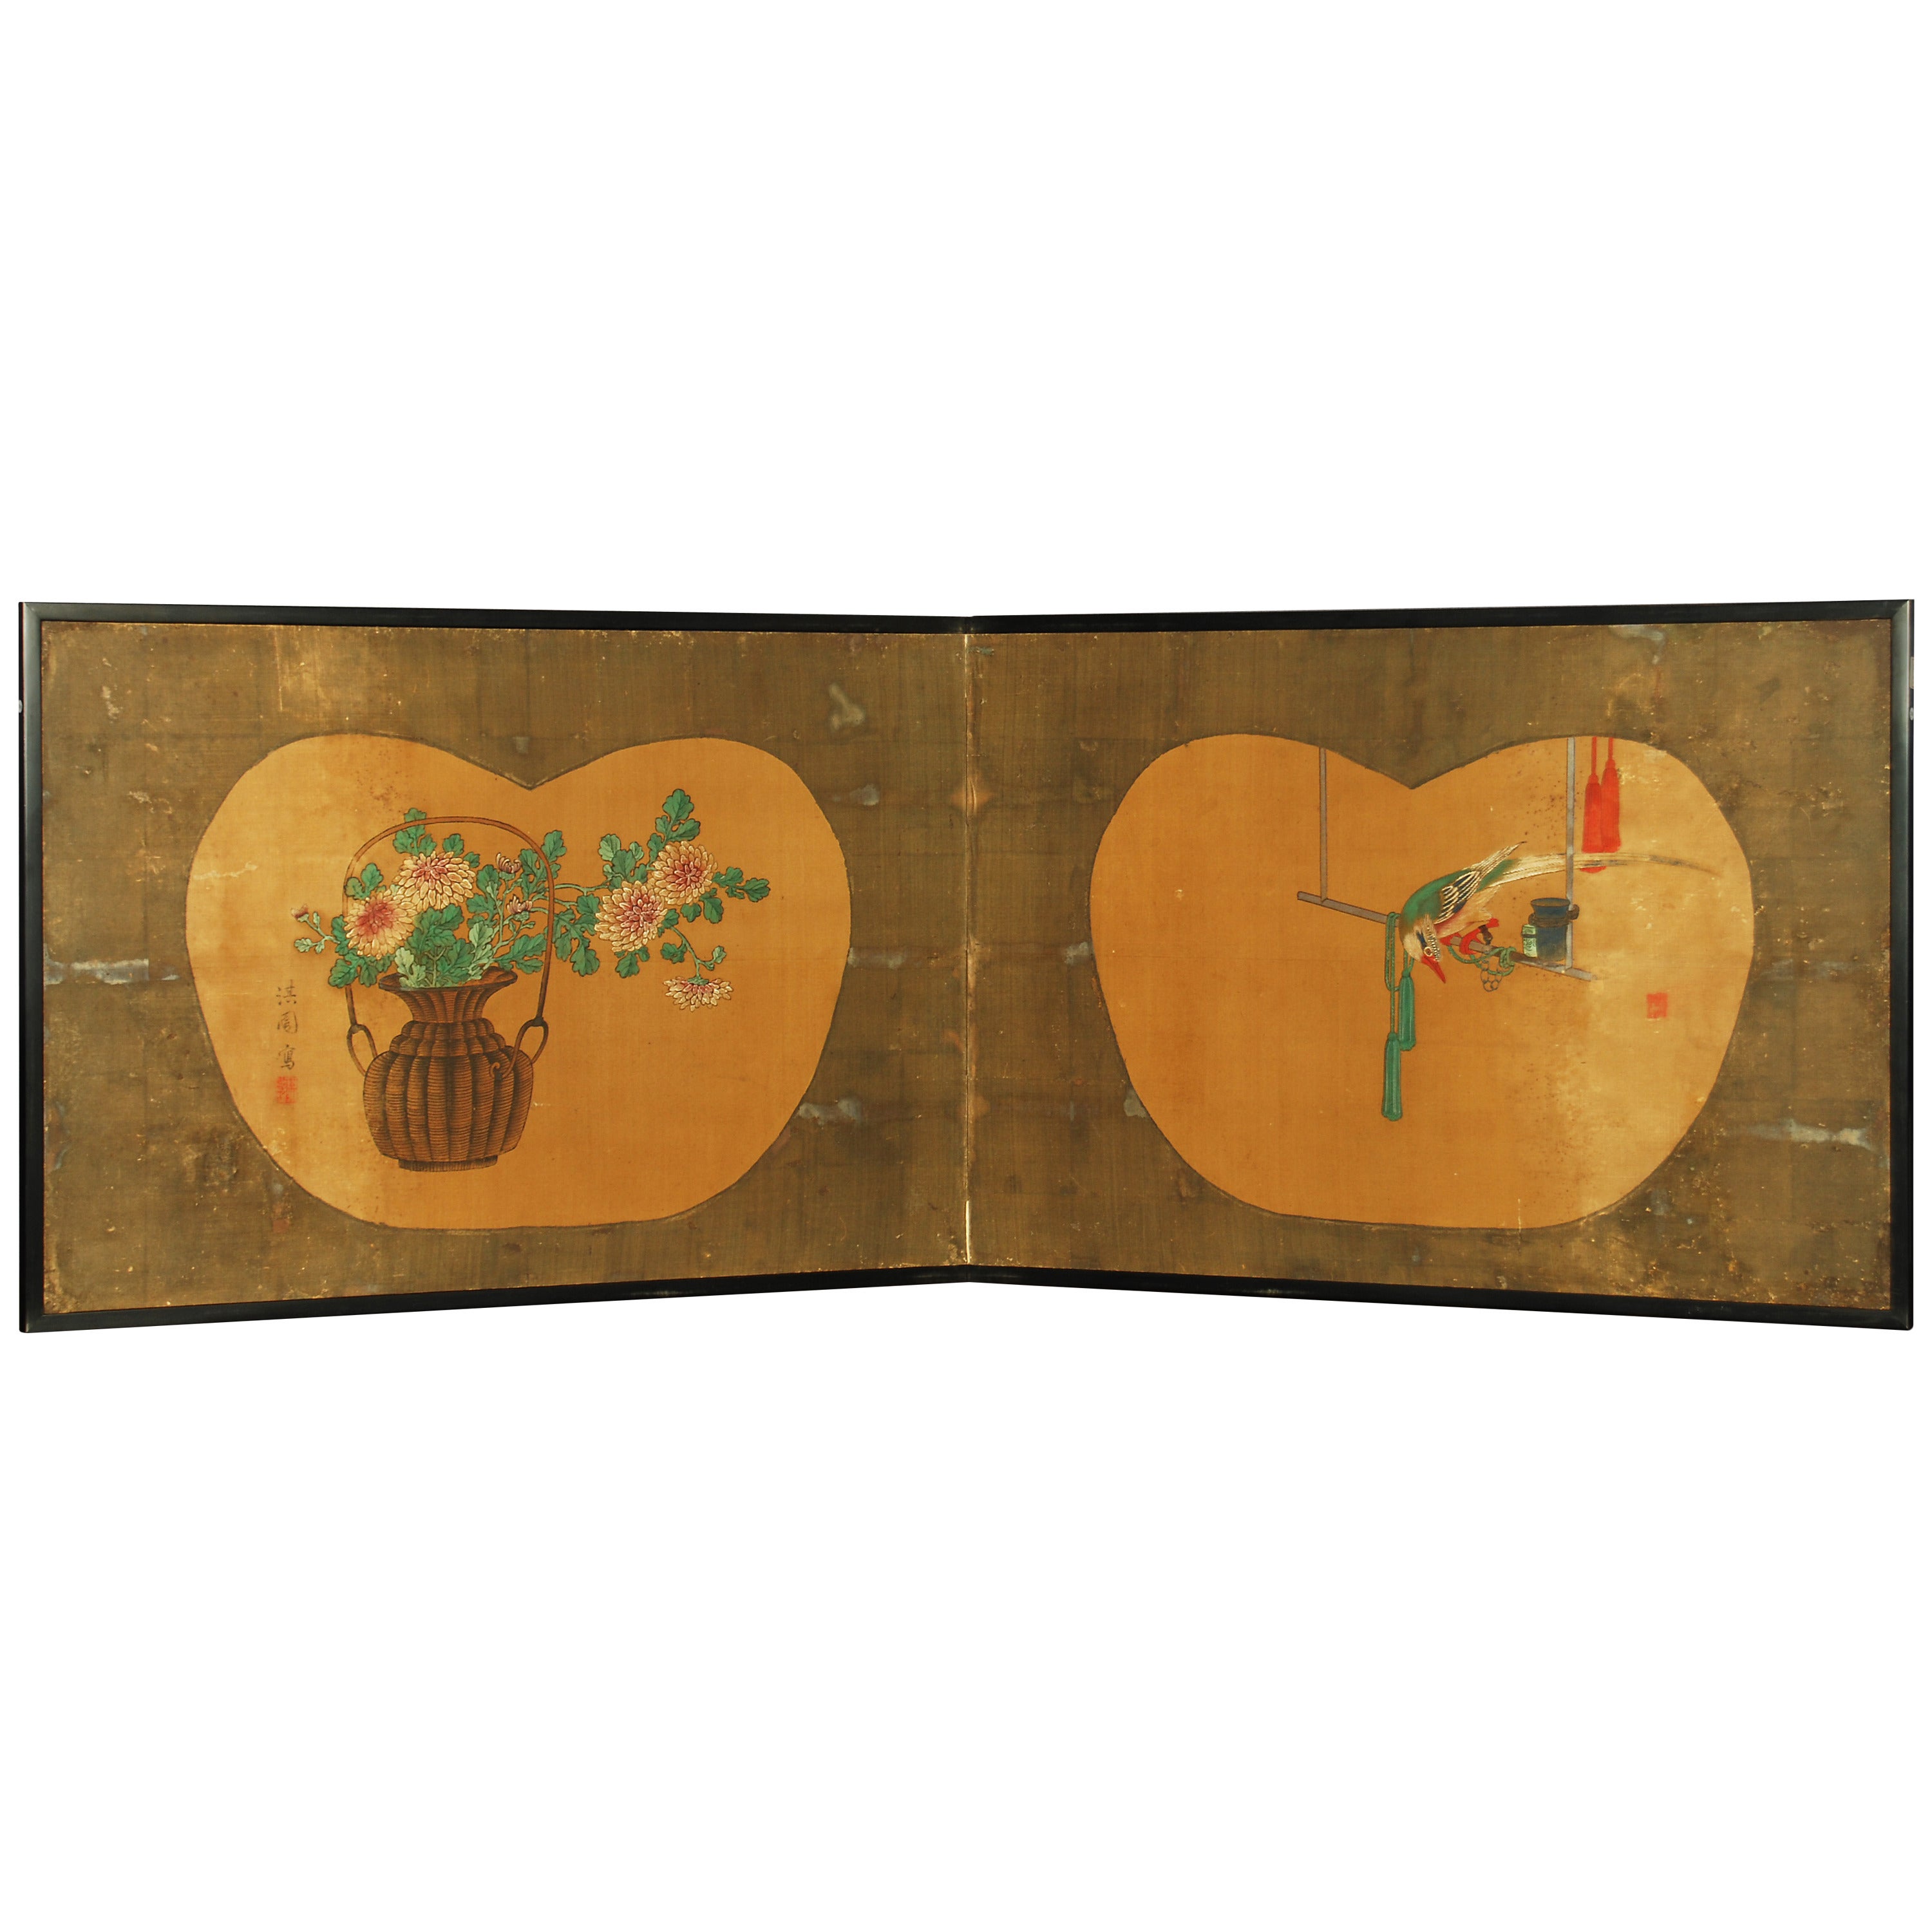 Antique Japanese Two-Panel Screen by Yanagisawa Kien